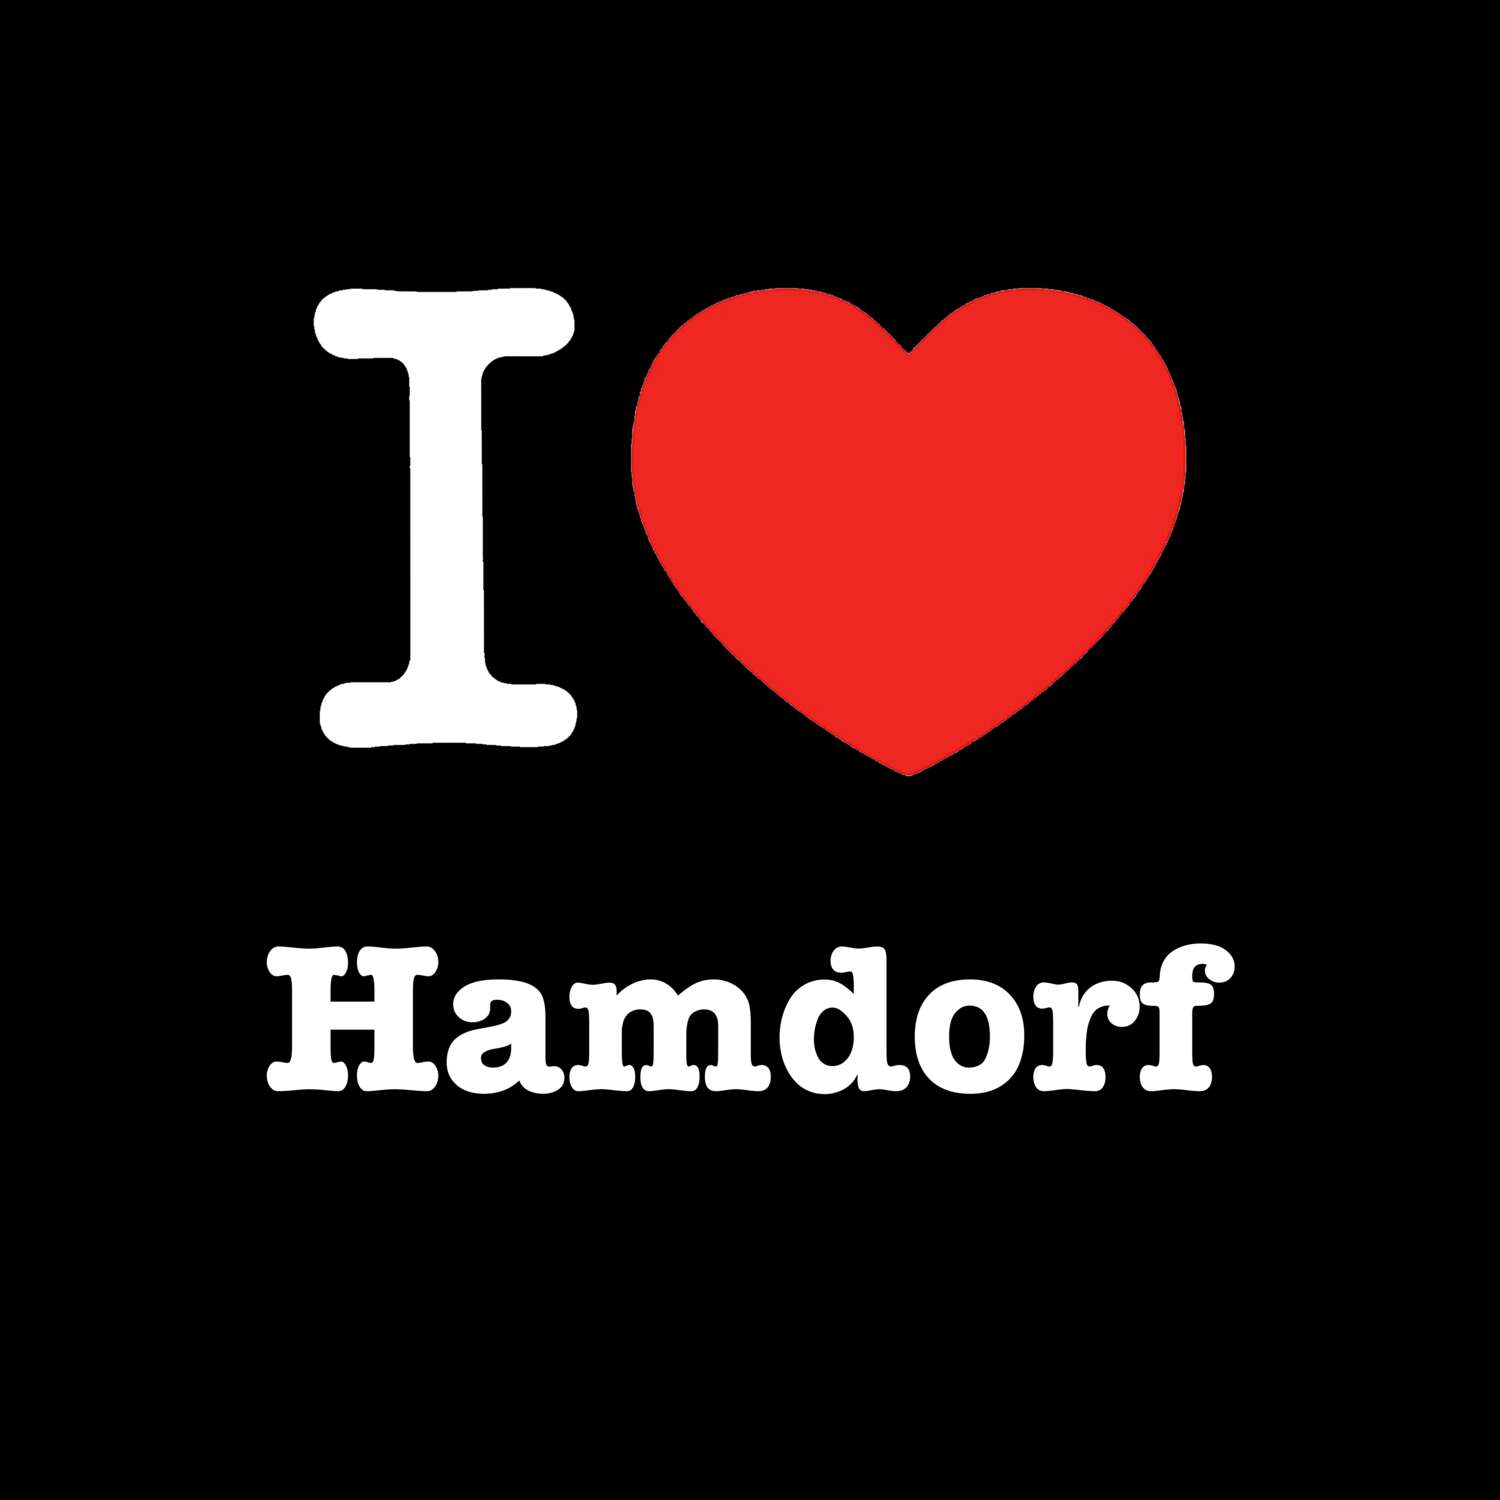 Hamdorf T-Shirt »I love«